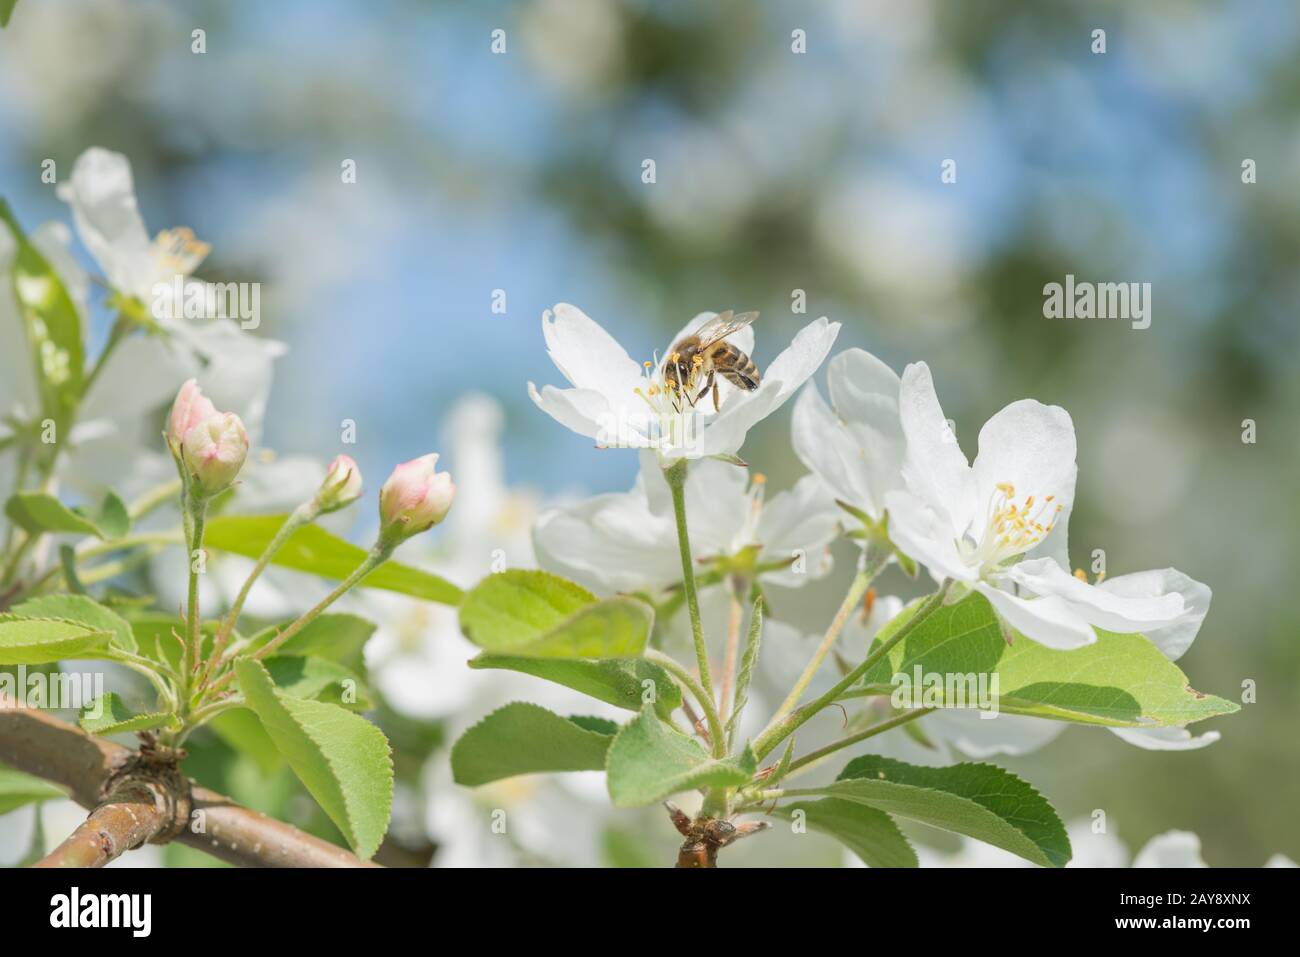 Bee melliferous on the flower of apple tree Stock Photo